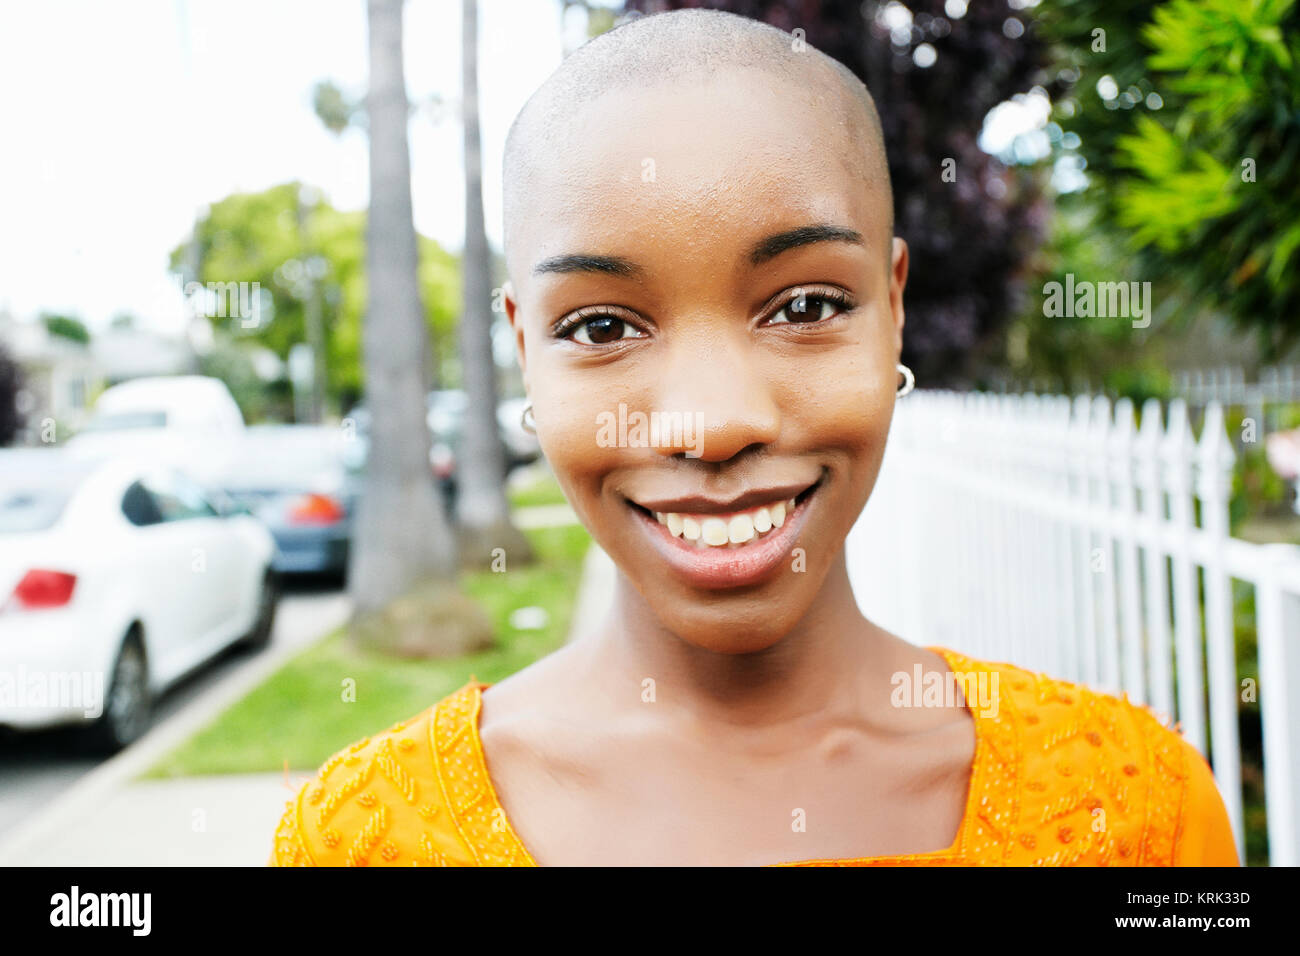 Portrait of bald smiling Black woman Stock Photo